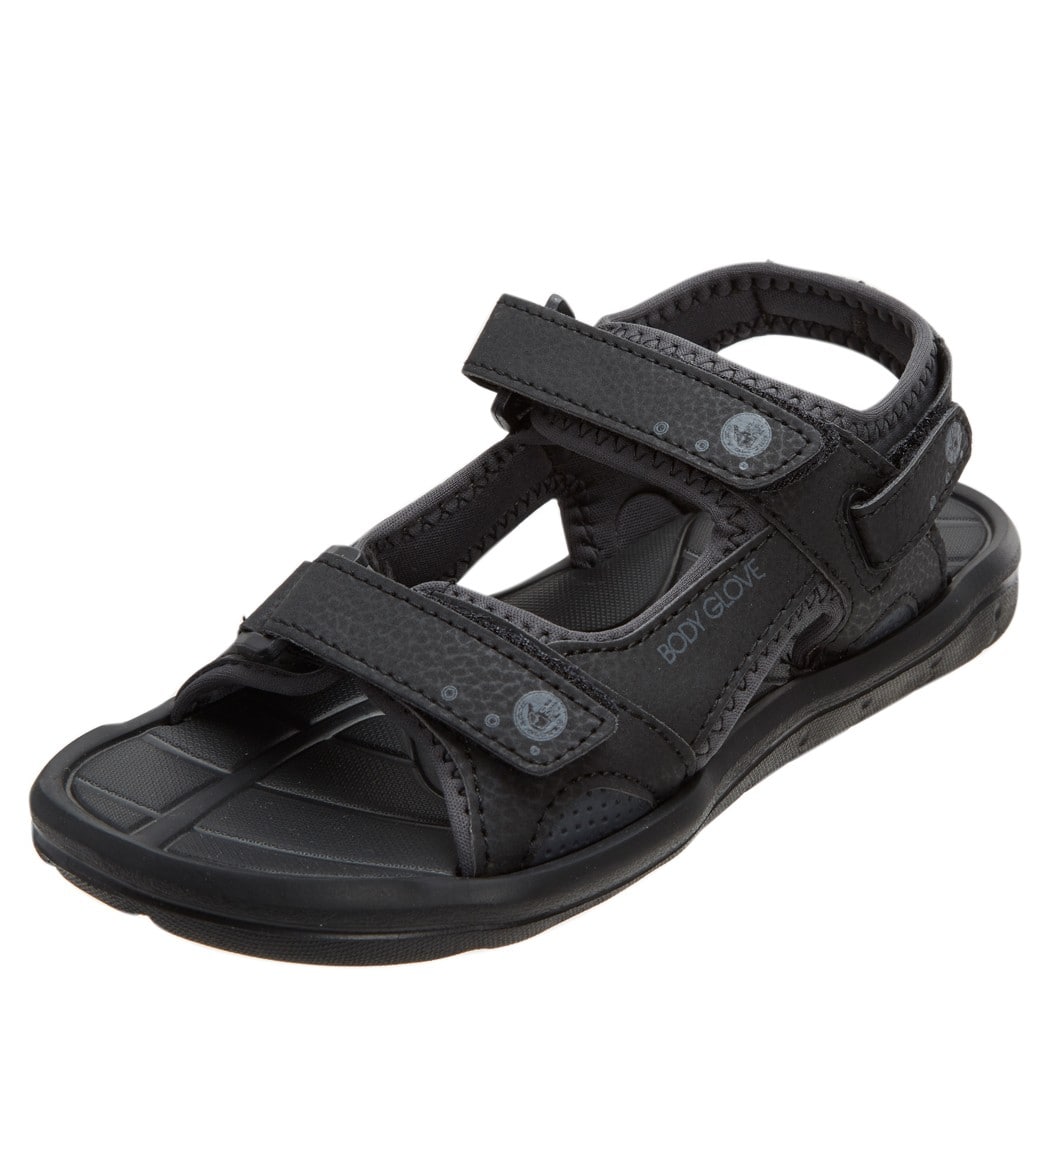 Body Glove Boys' Trek Sandals - Black/Black 11 - Swimoutlet.com